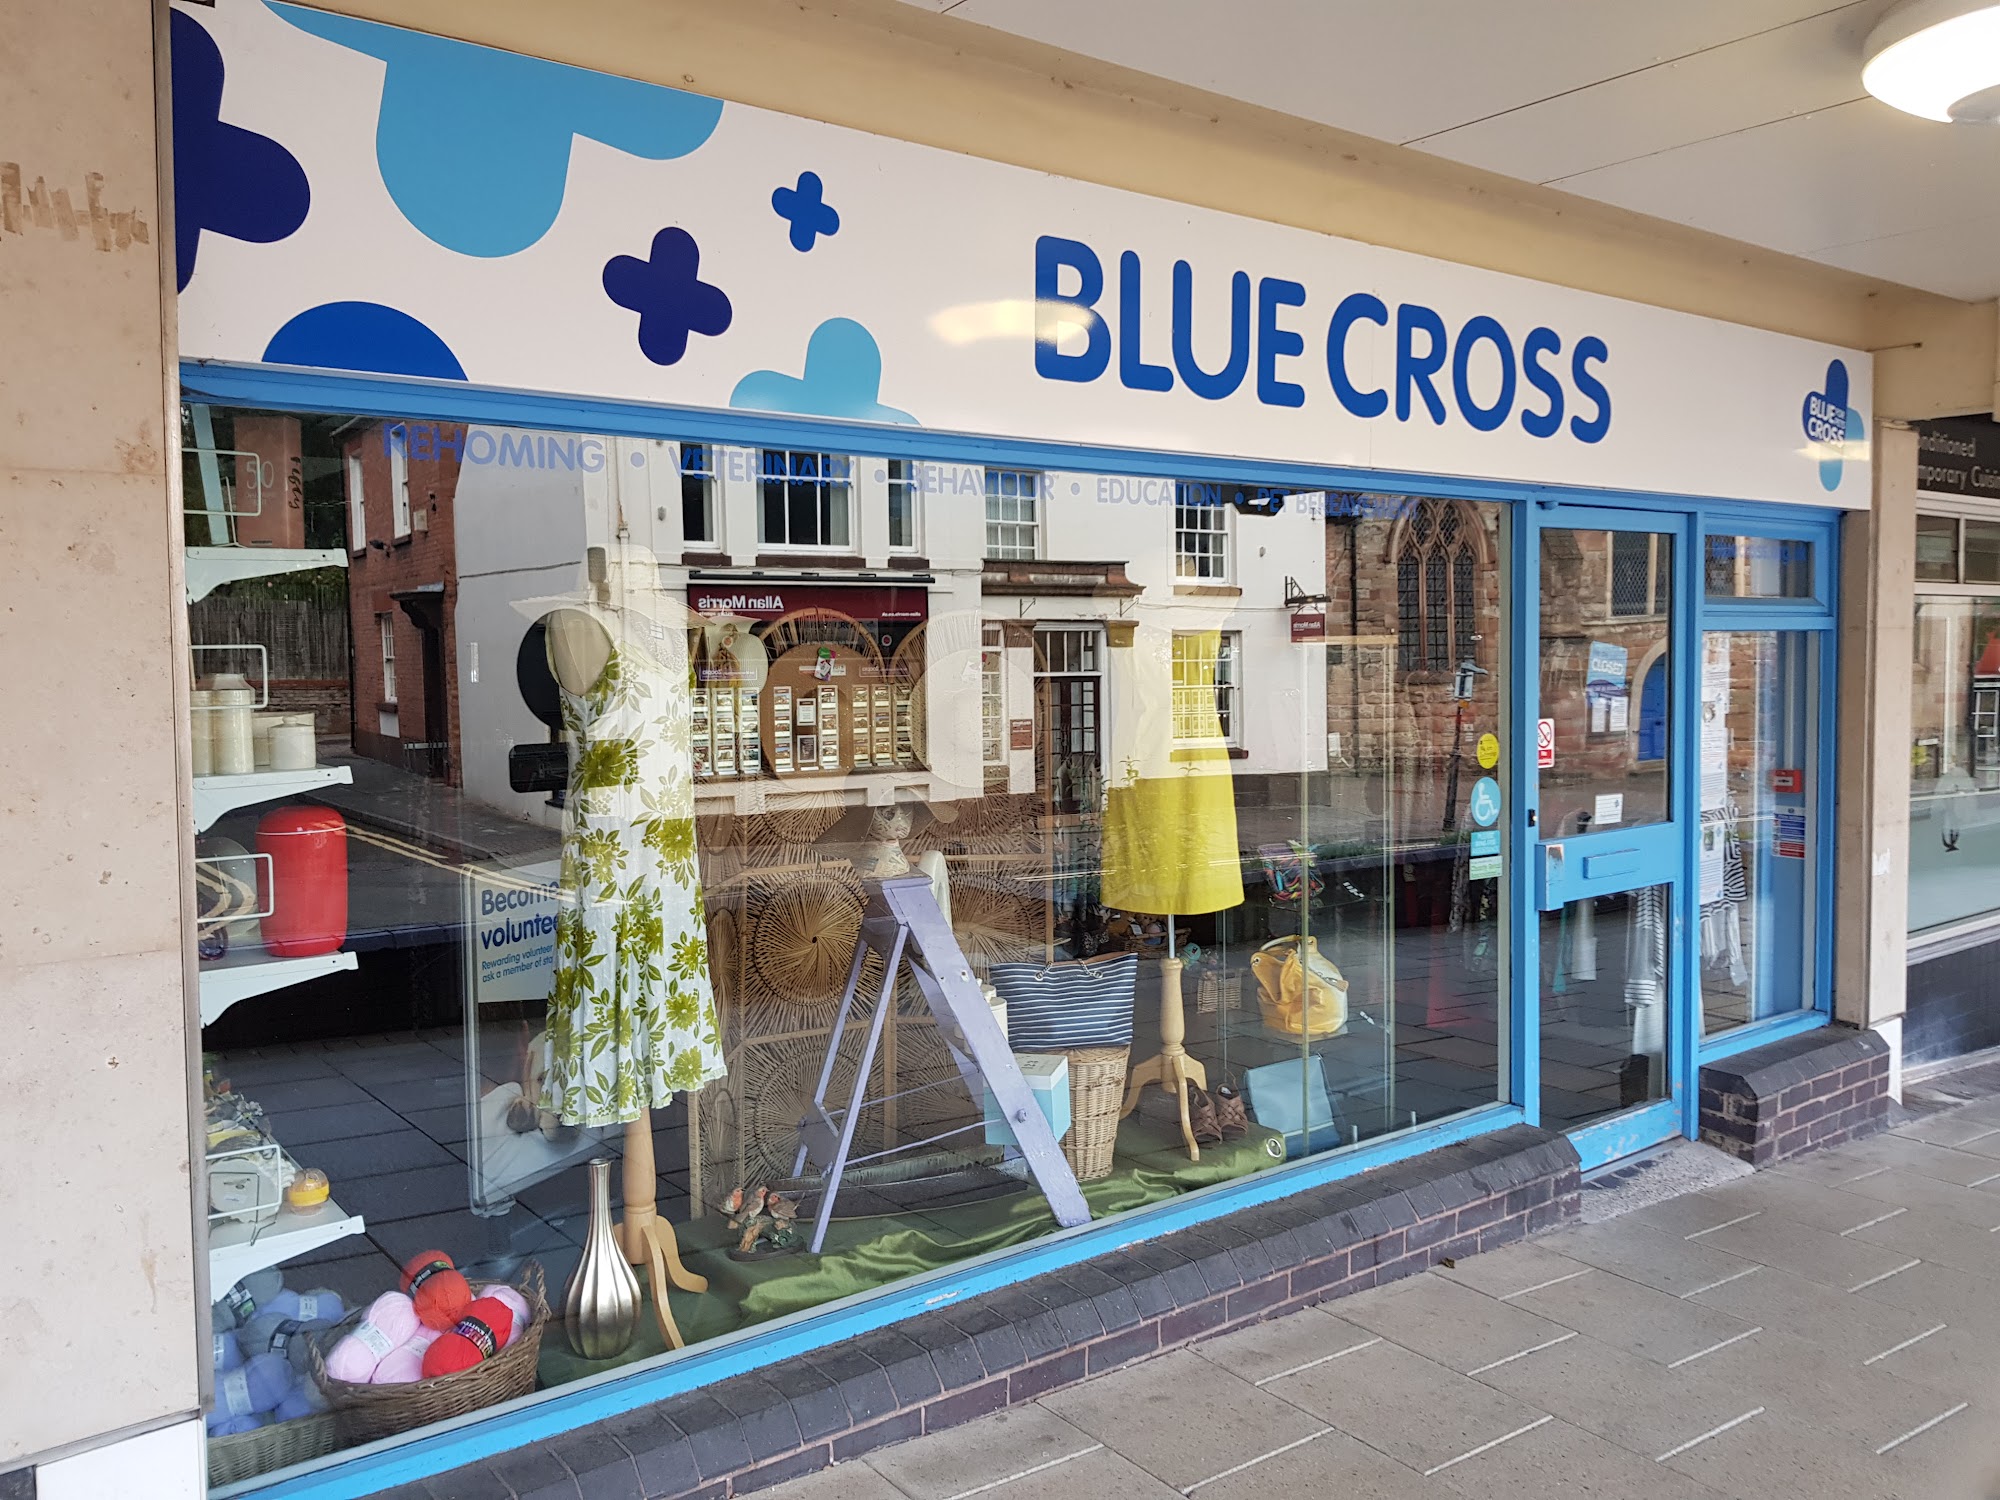 Blue Cross charity shop, Droitwich